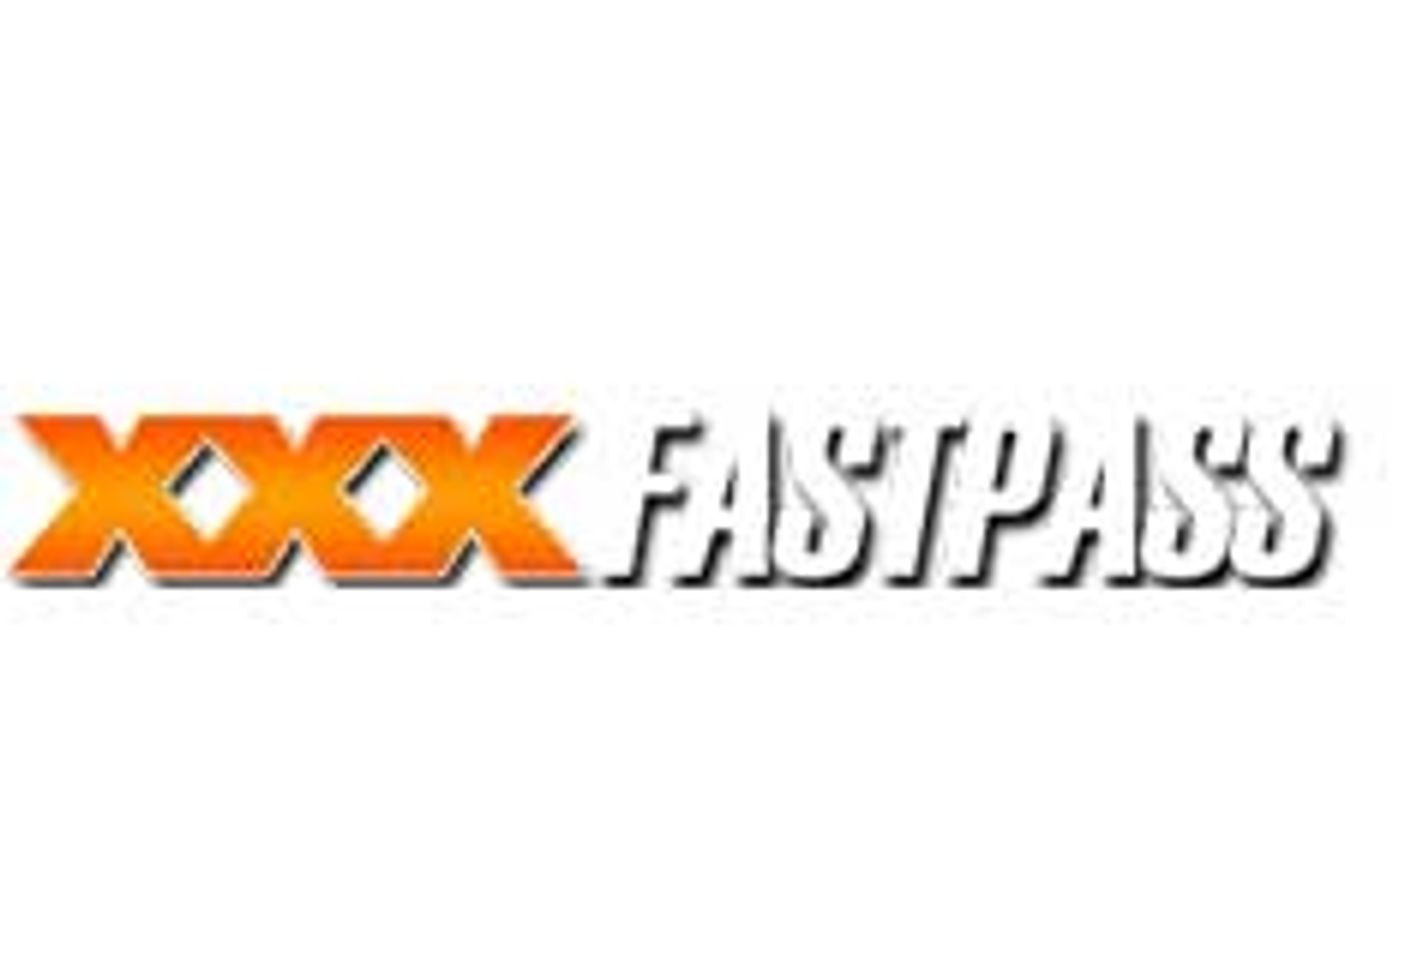 Voodoo and Karlie Montana Launch MiPhoneSex.com with XxxFastPass